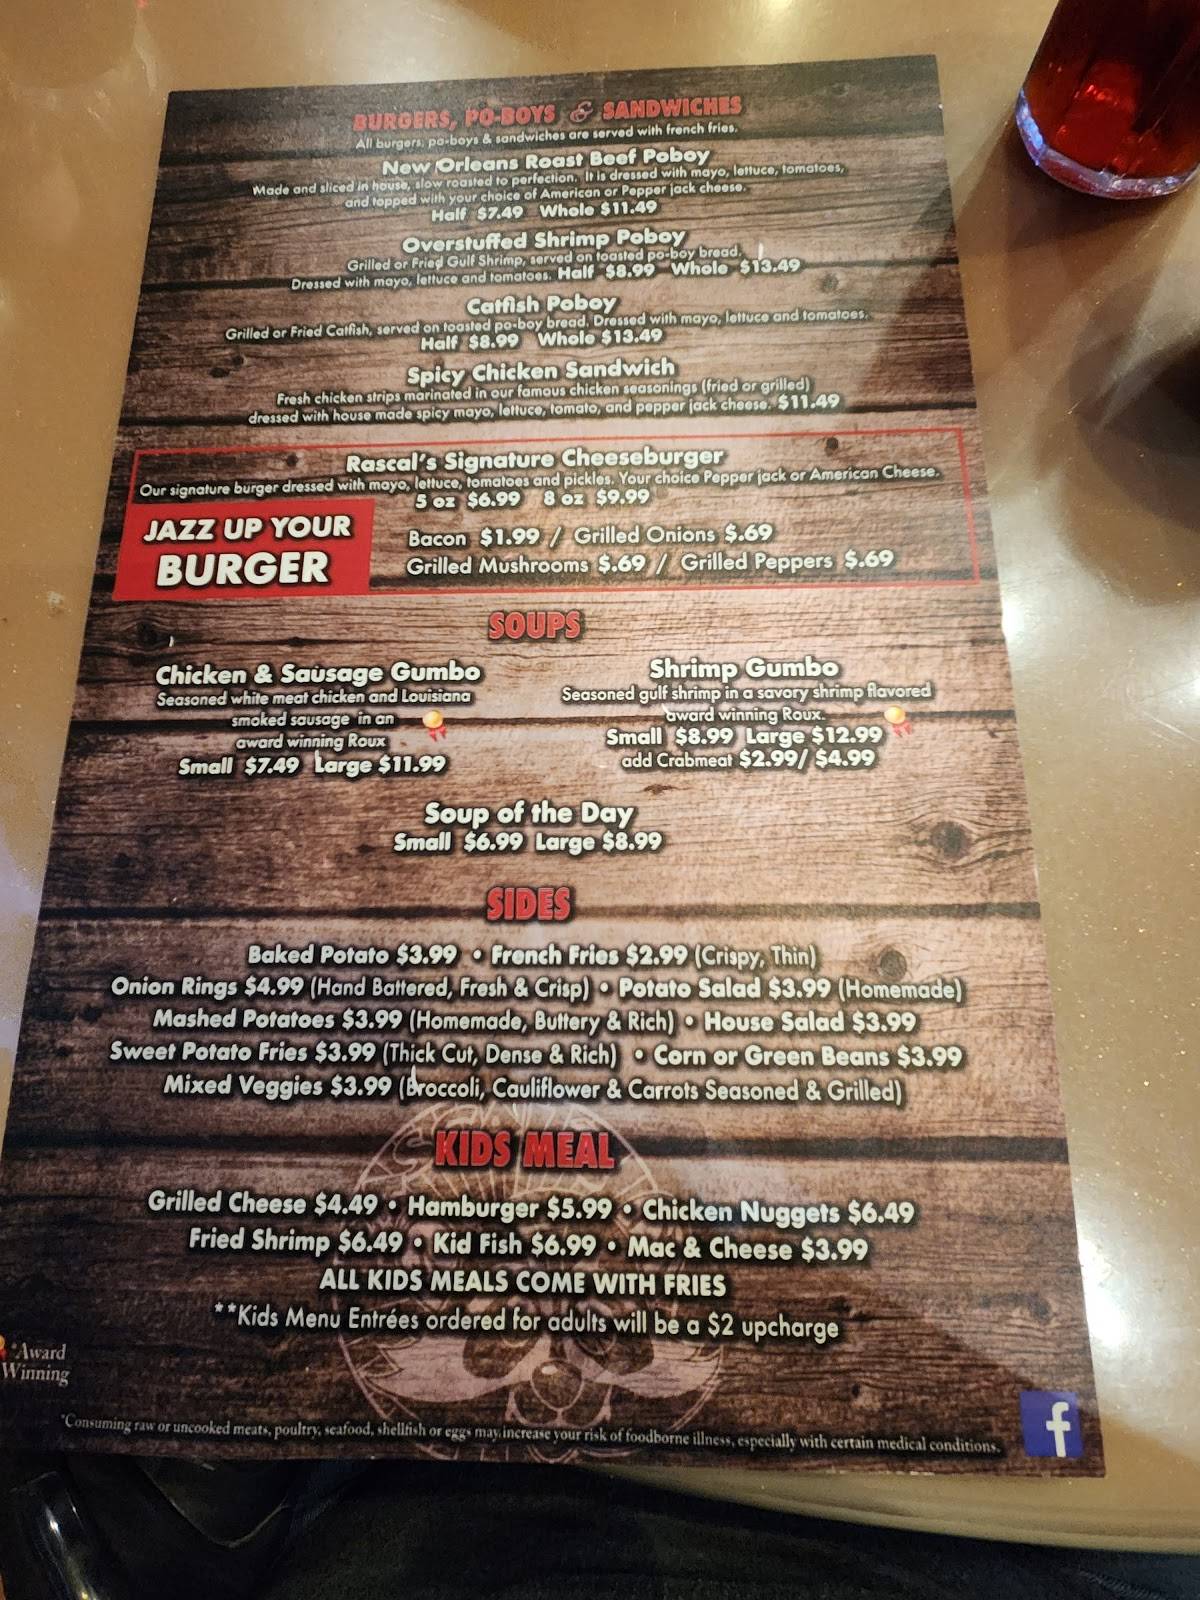 Rascal's Cajun Restaurant menu